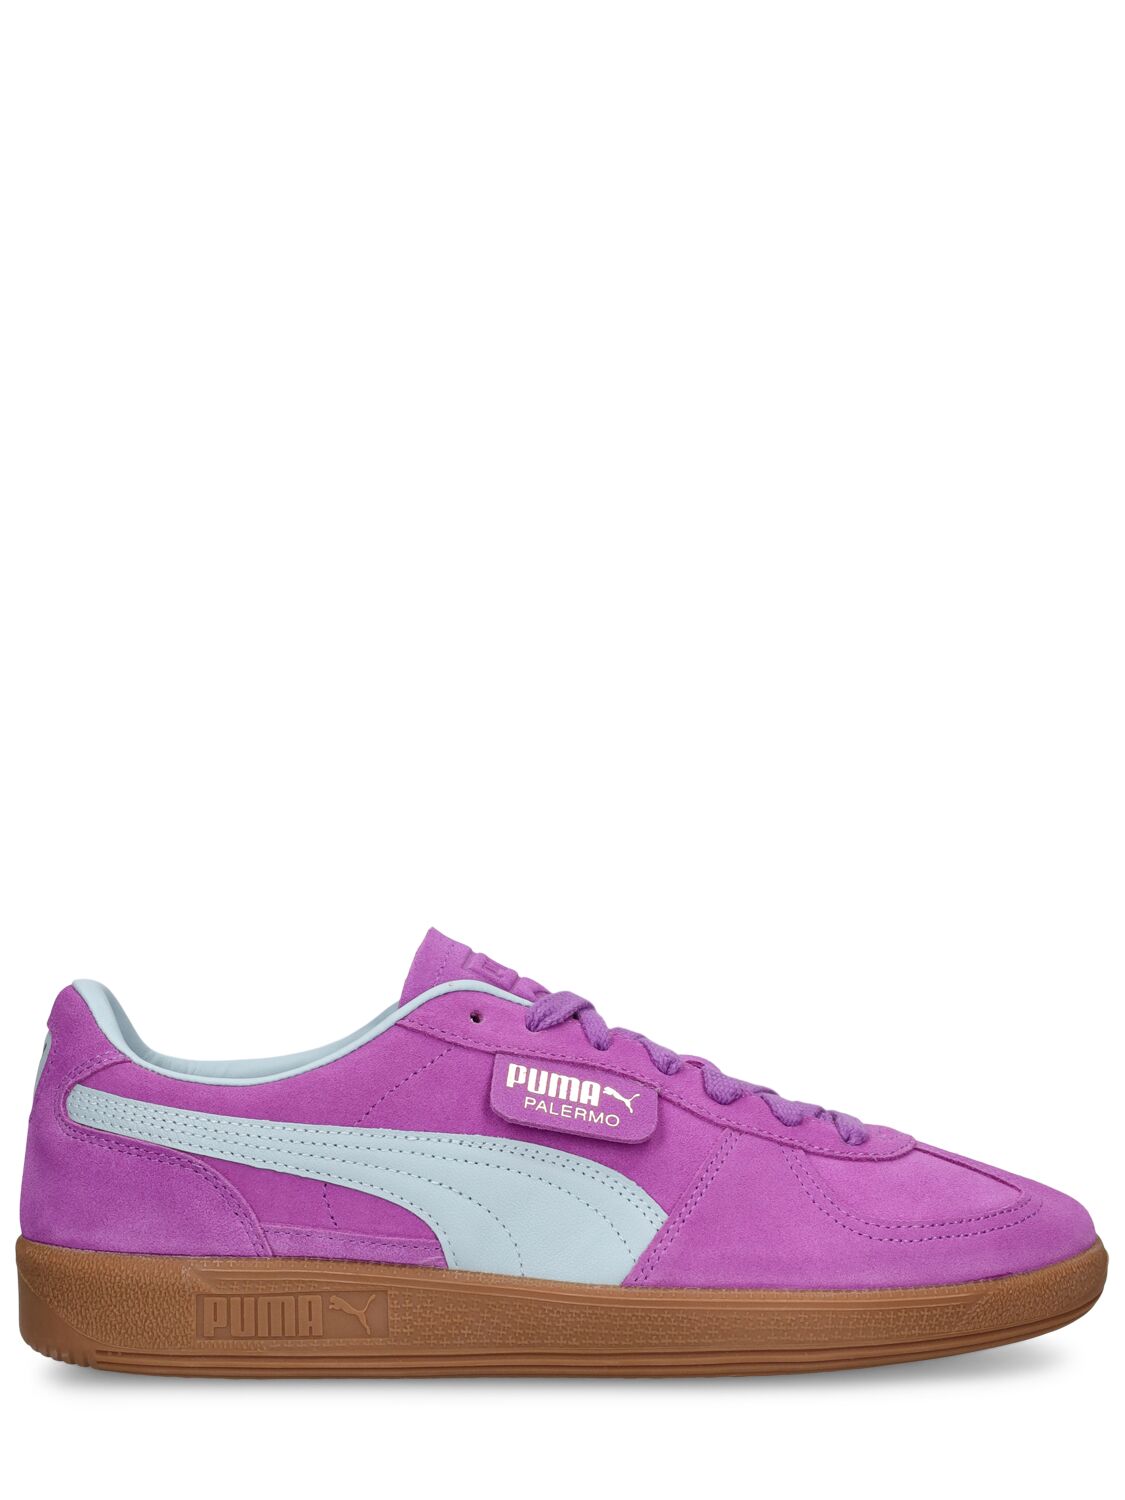 Puma Palermo运动鞋 In Purple,orange